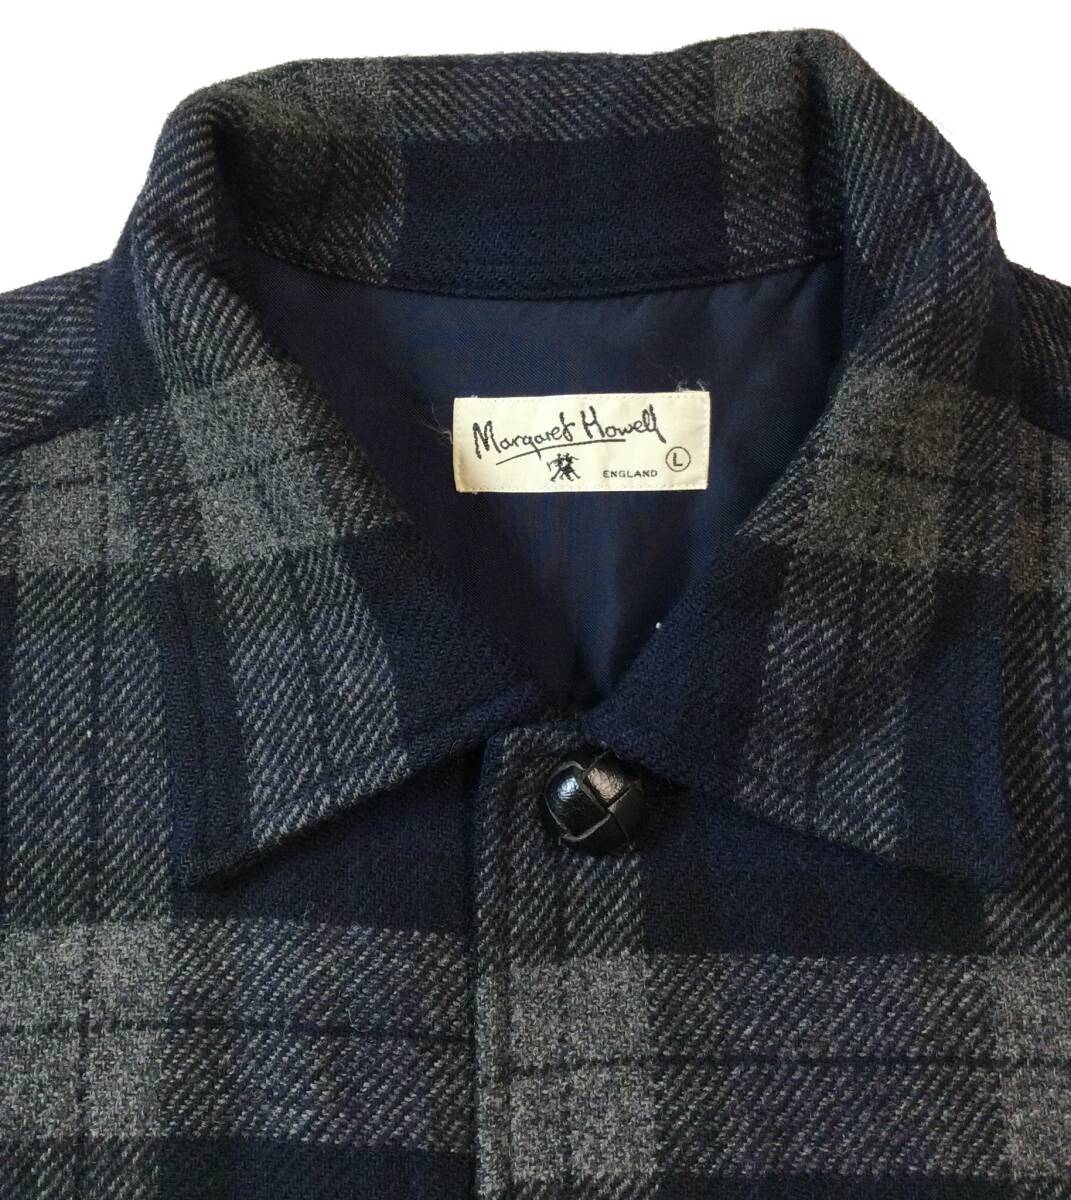 MARGARET HOWELL Margaret Howell wool shirt shirt jacket check ... button navy / gray series men's L